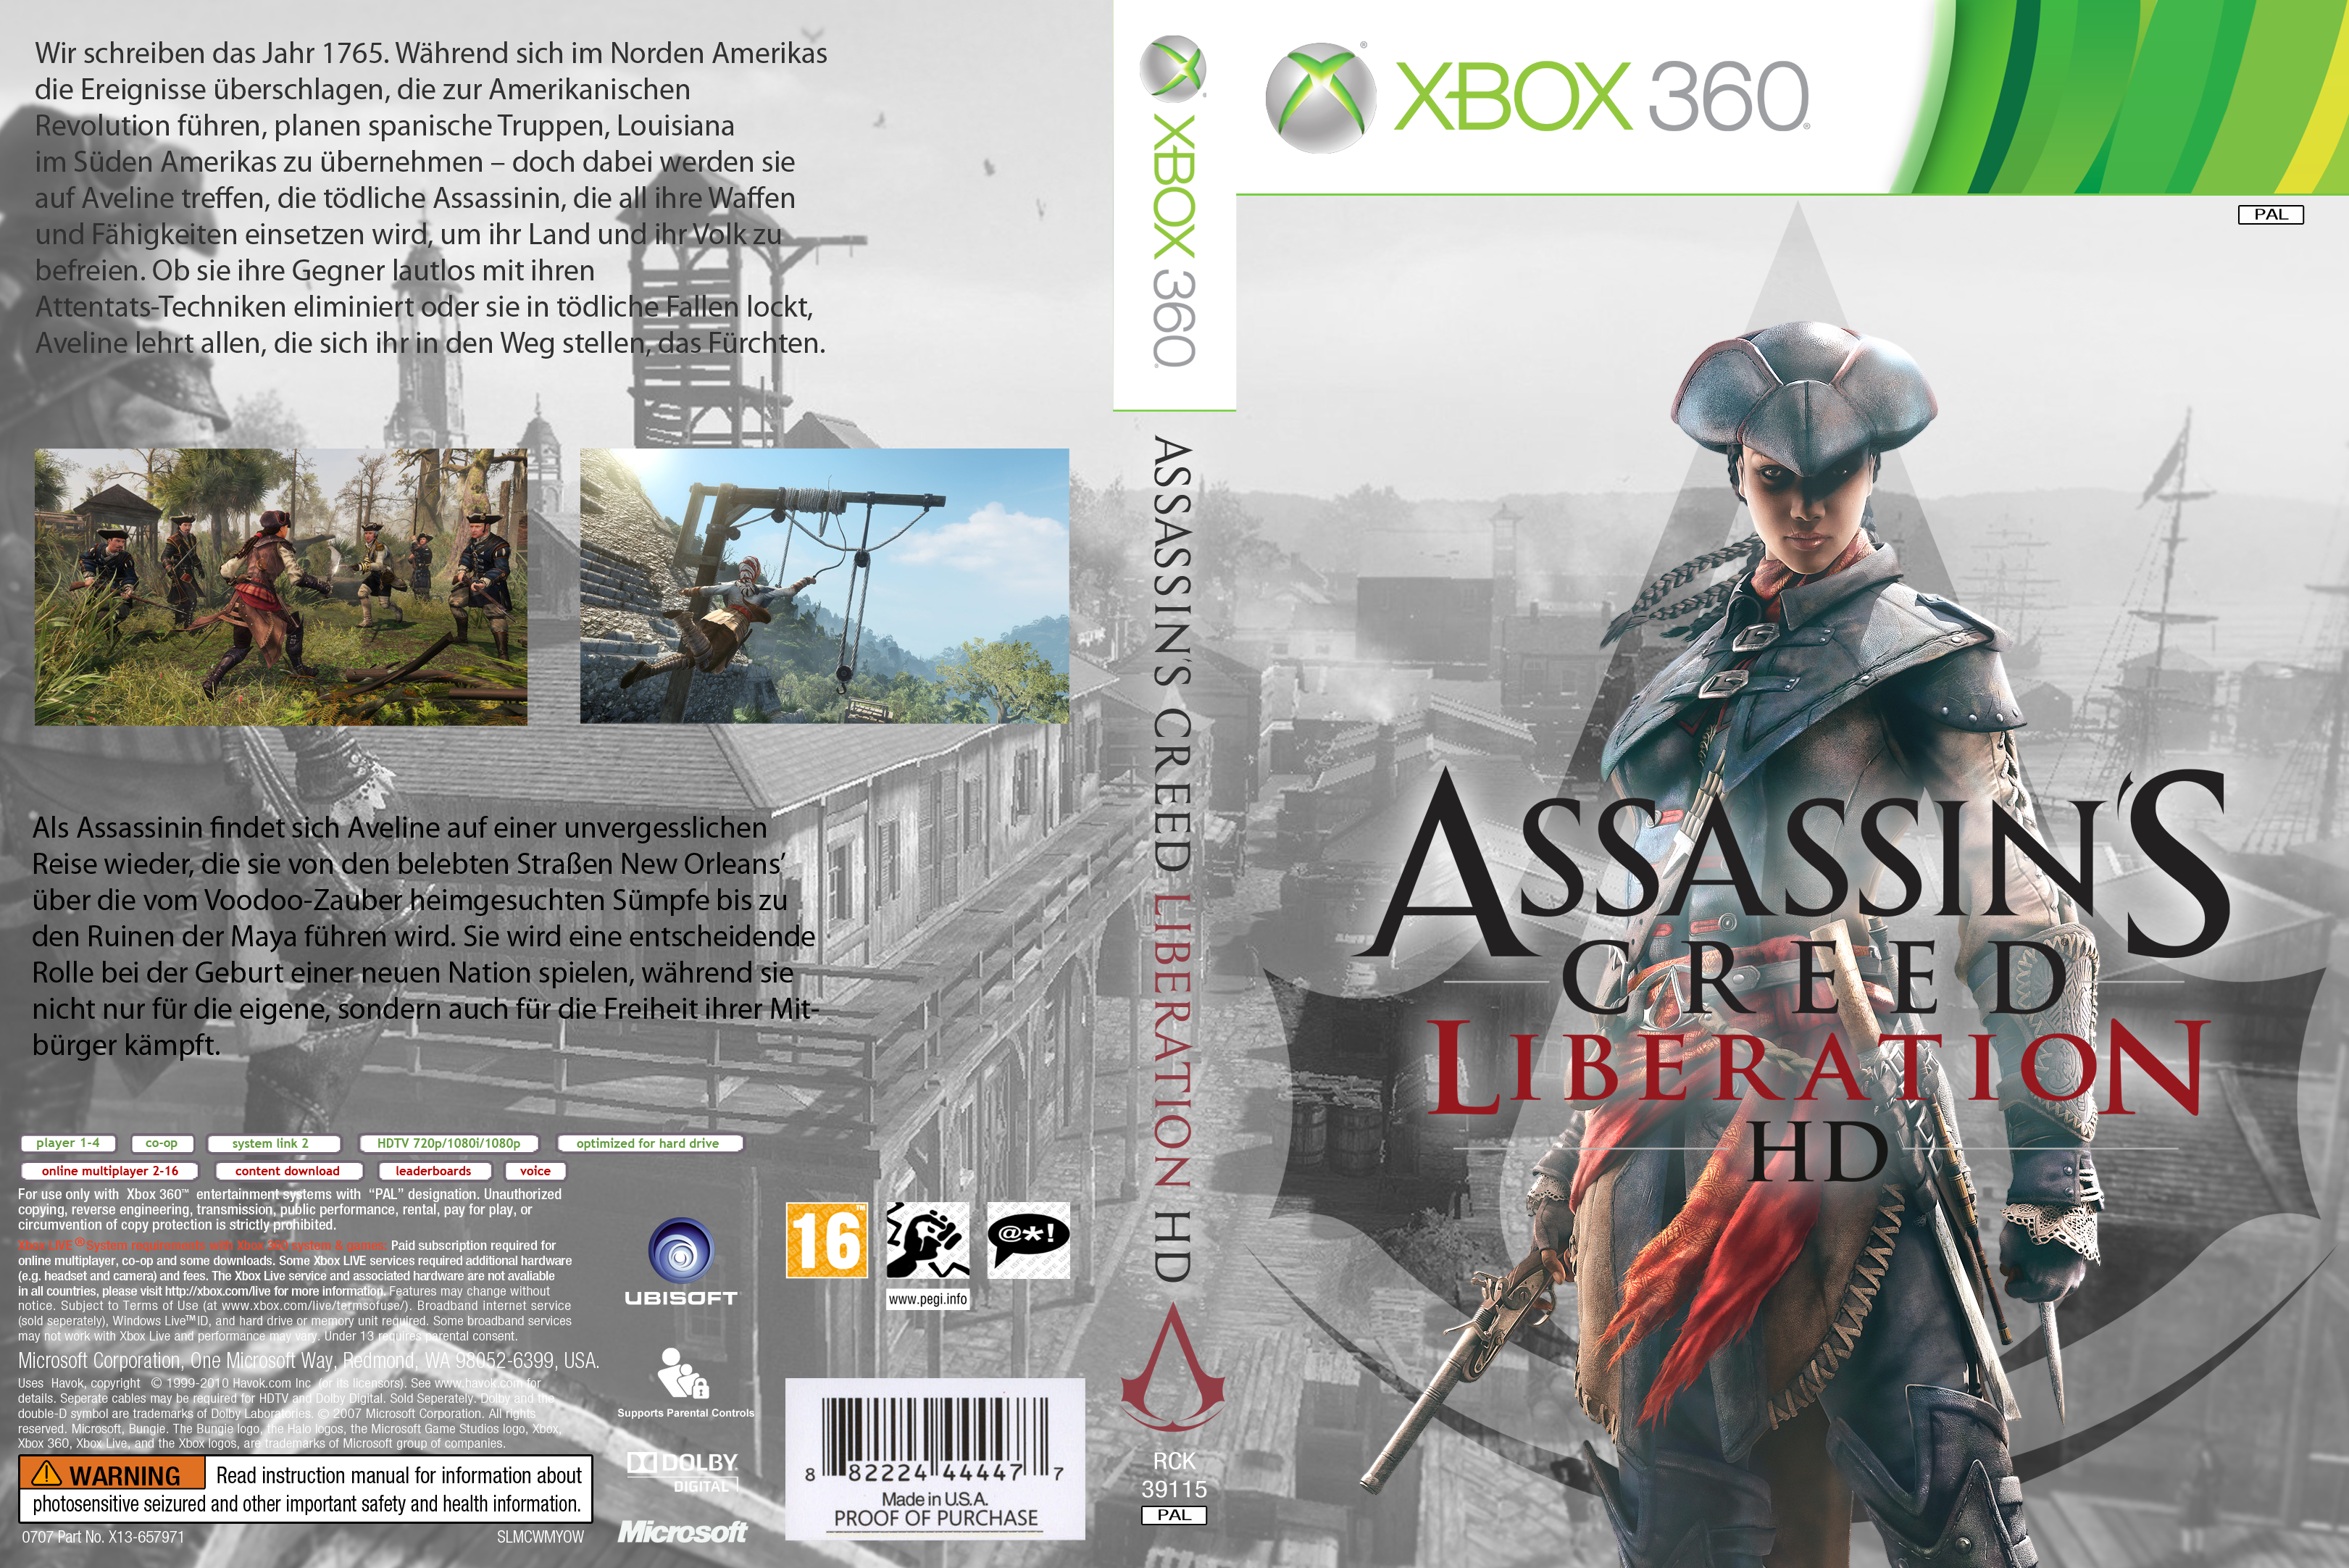 Assassins Creed Liberation HD box cover